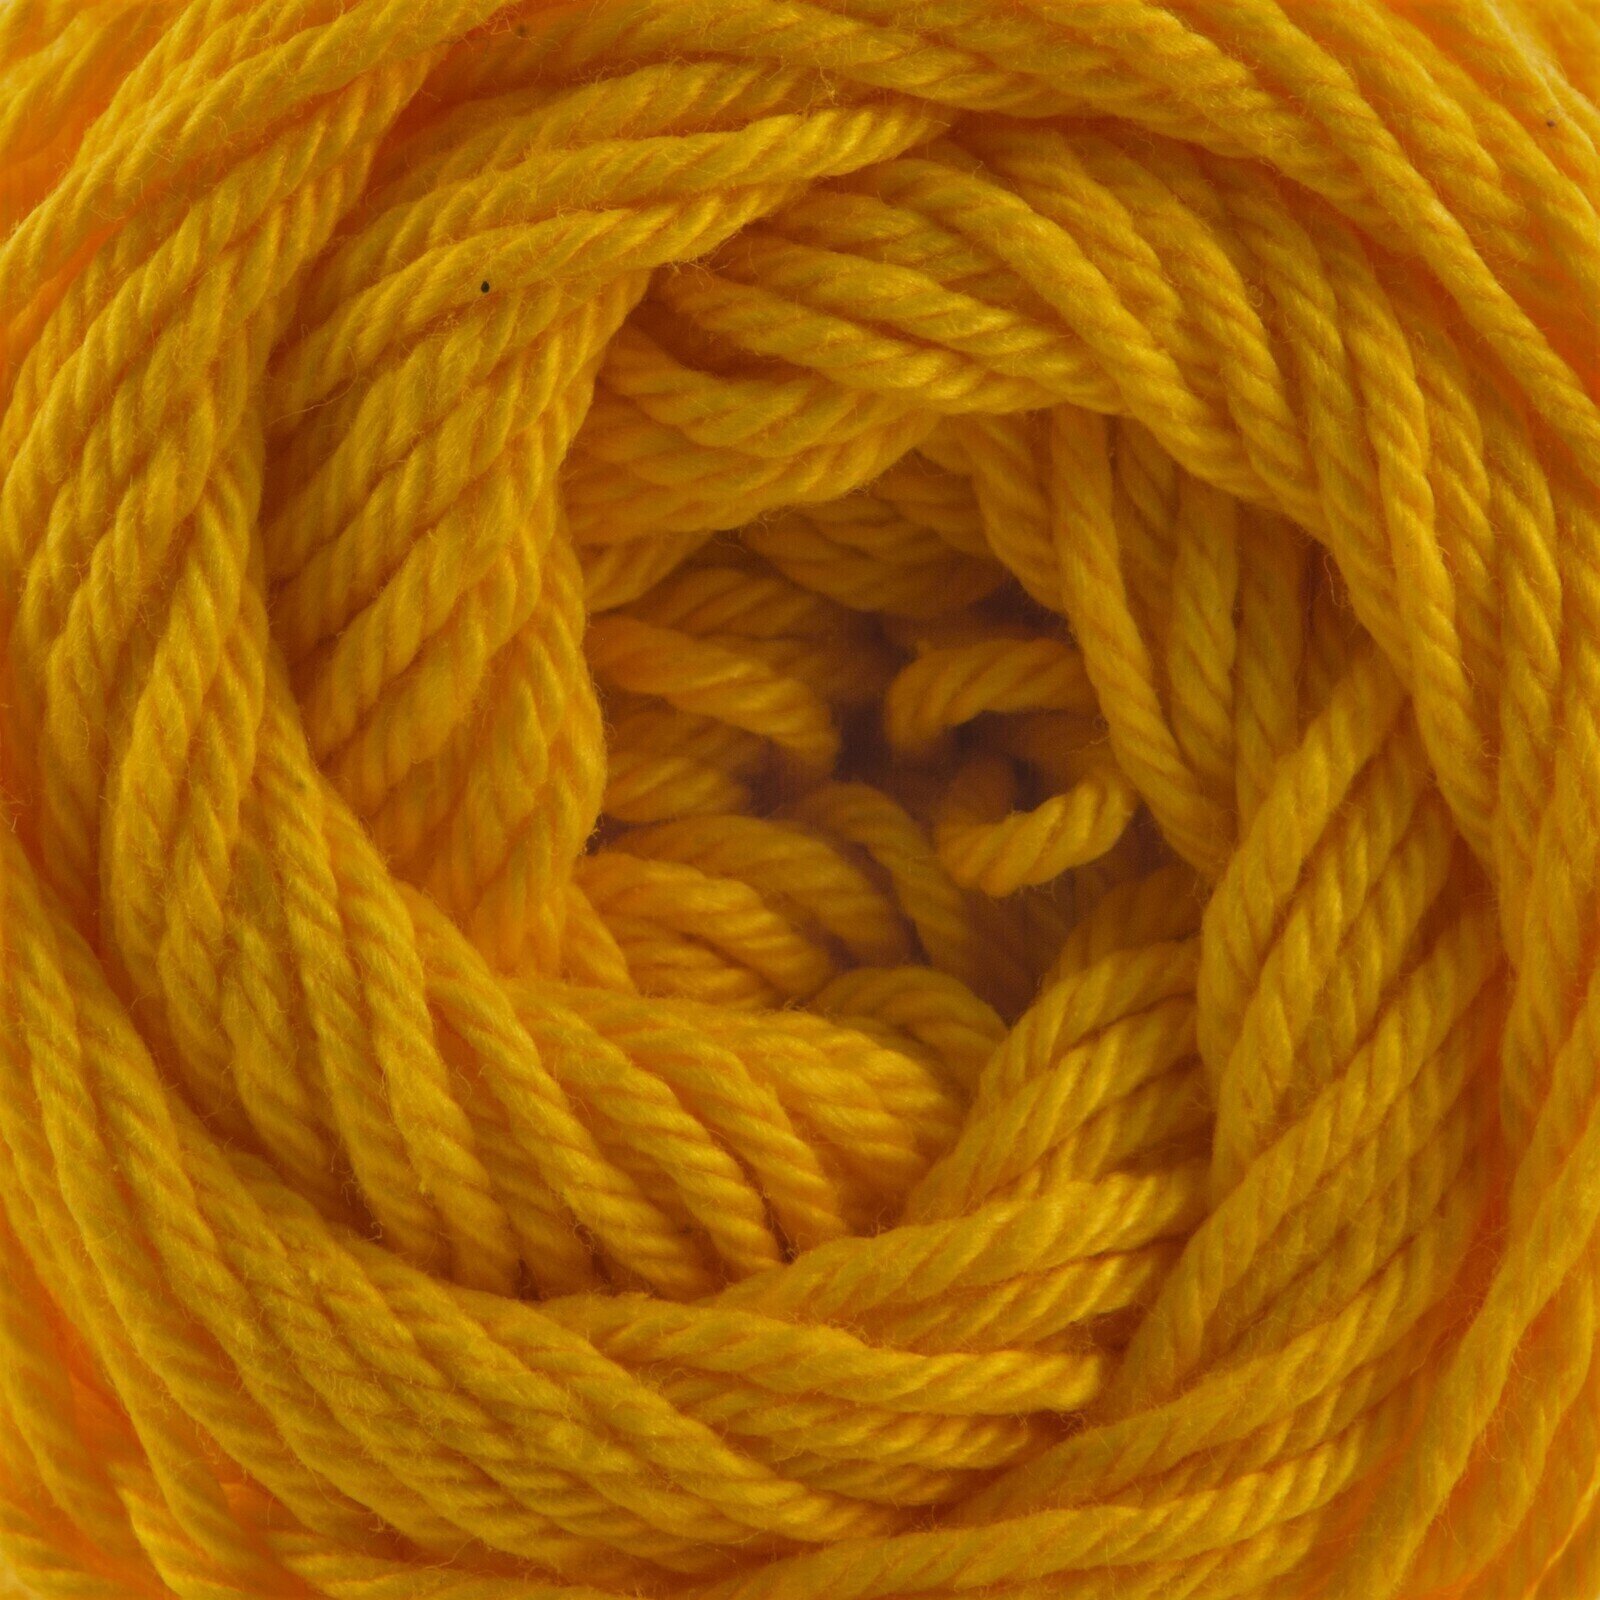 Fire de tricotat Nitarna Ceska Trebova Silva 1292 Yellow/Orange